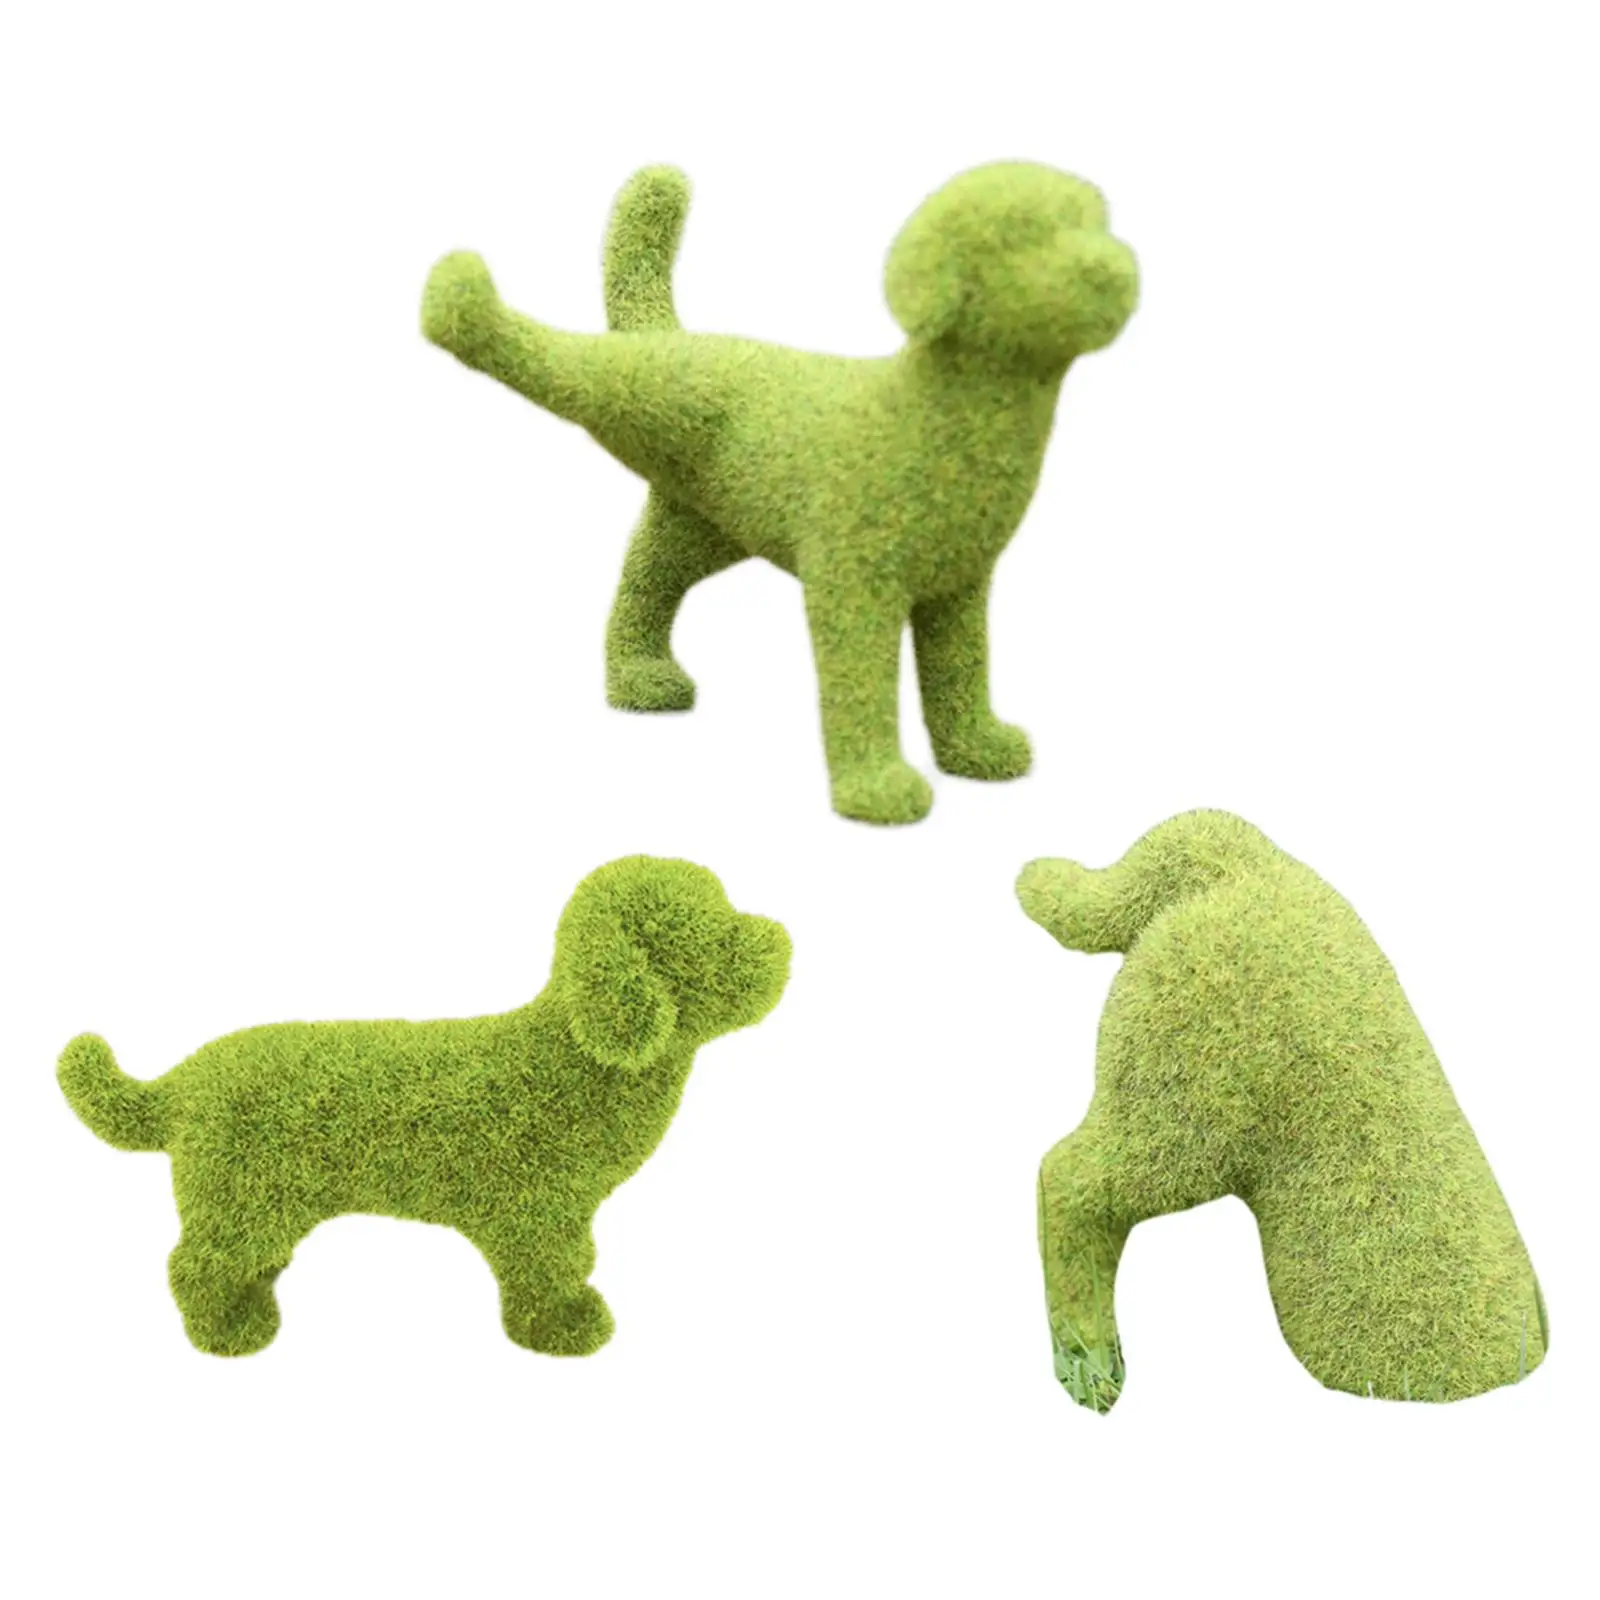 Flocking Animal Figurines Statue Artificial Green Moss Dog Sculpture Ornament